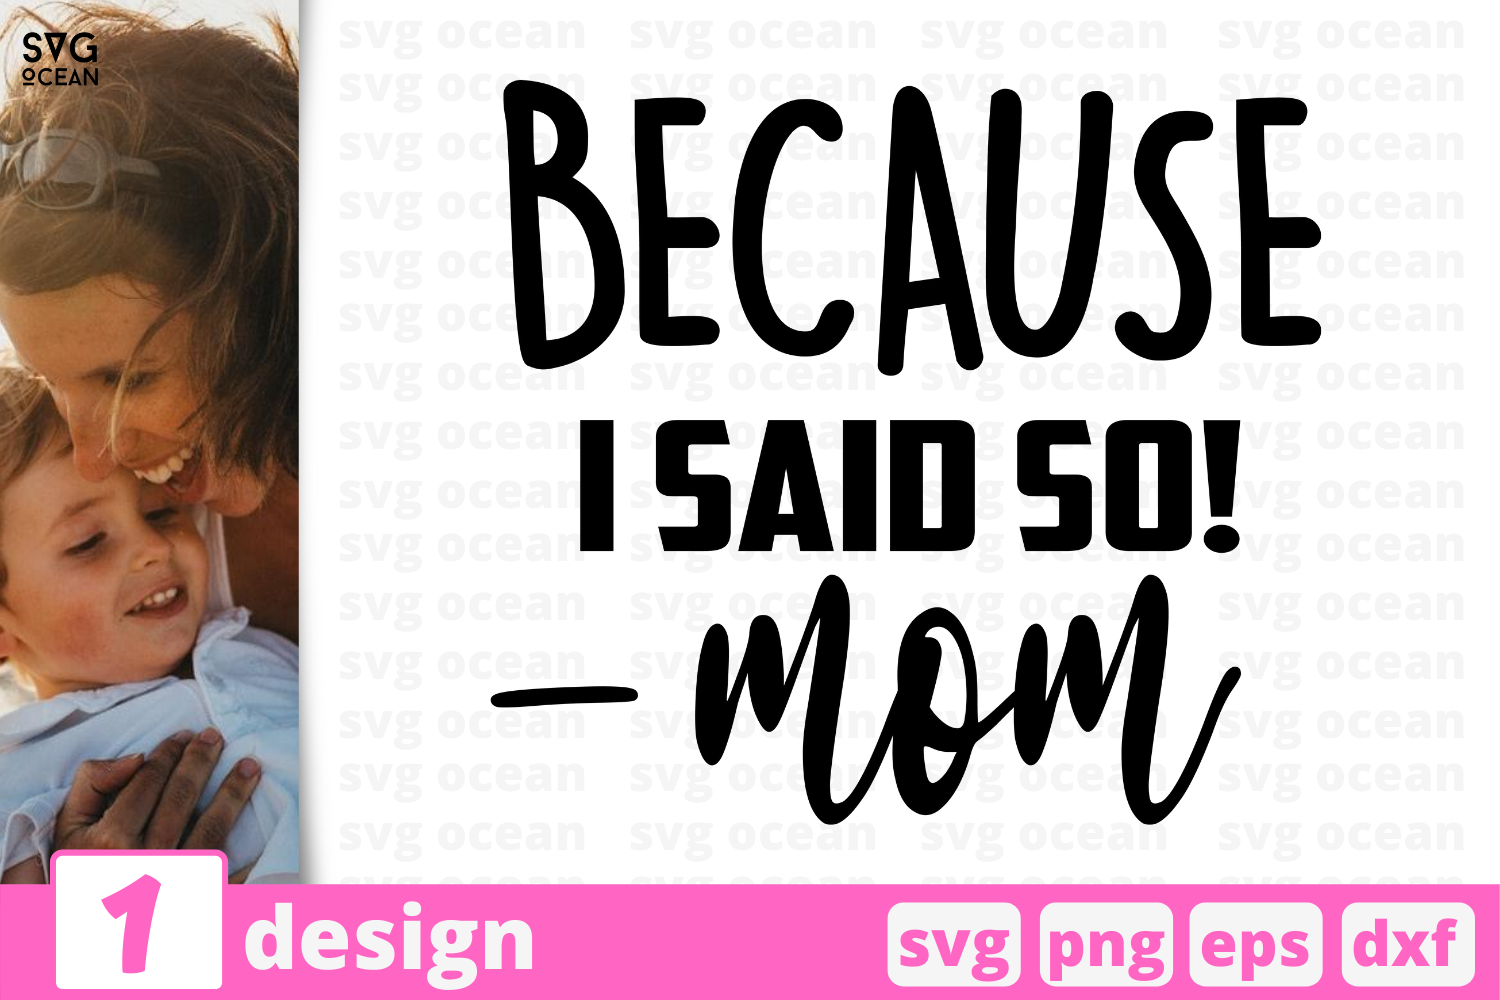 Download 1 BECAUSE I SAID SO! MOM, Motherhood quotes cricut svg By SvgOcean | TheHungryJPEG.com